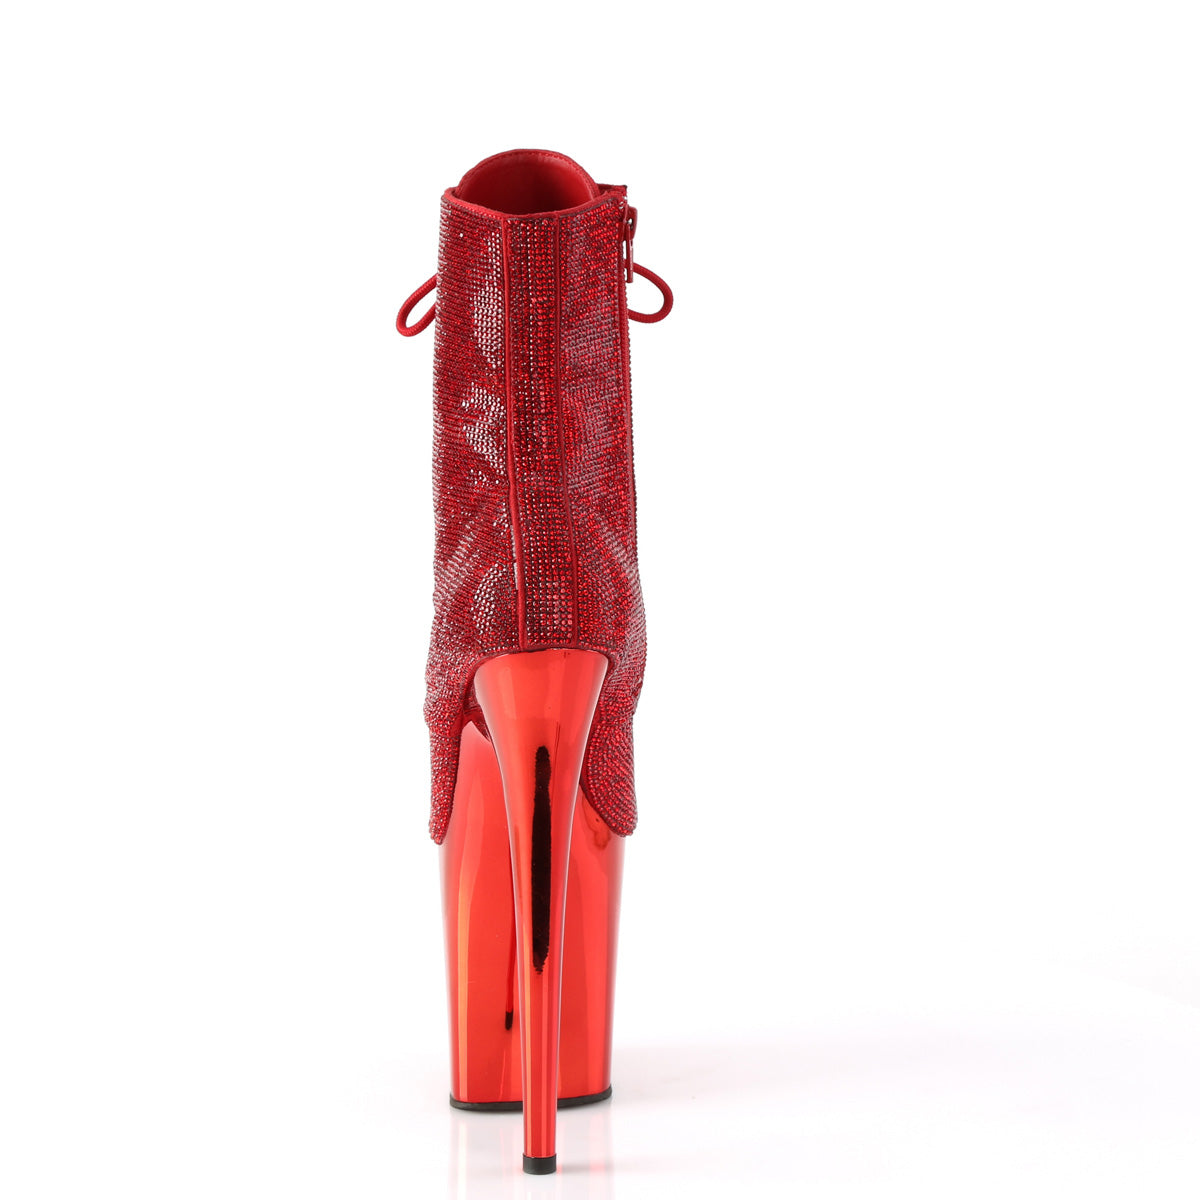 Red Rhinestone Pole Dancer Boots - Flamingo-1020chrs